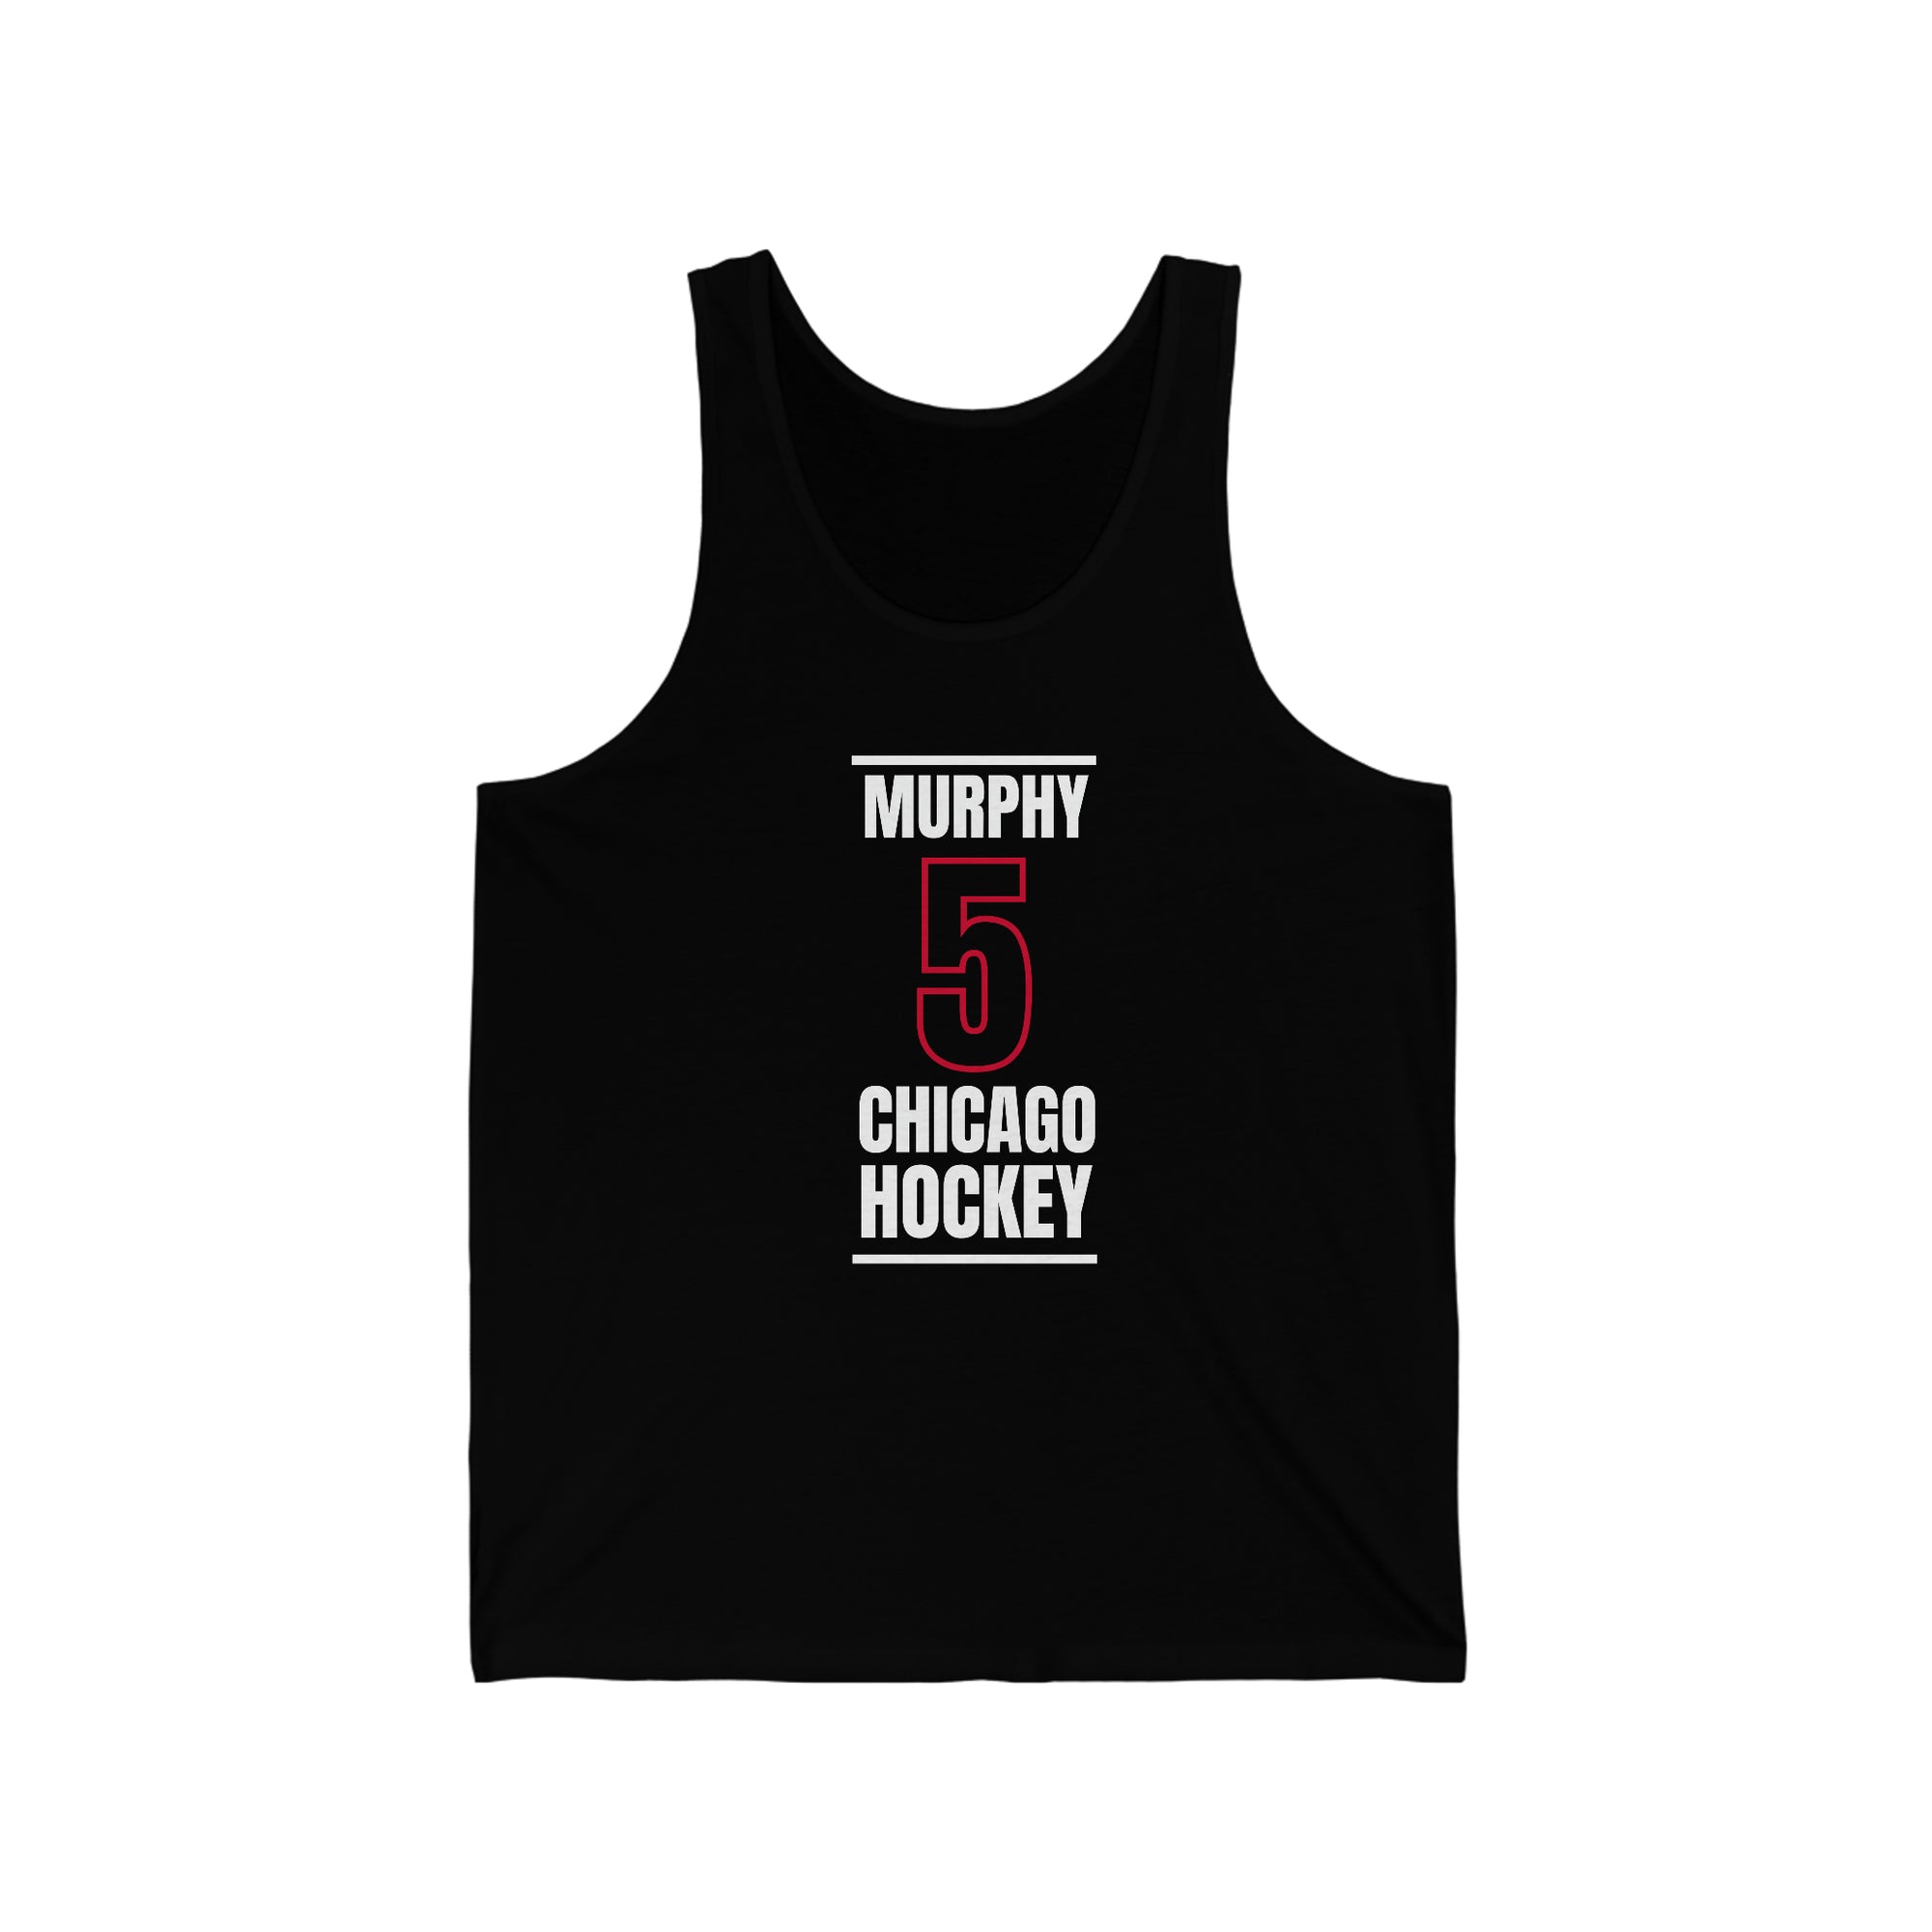 Murphy 5 Chicago Hockey Black Vertical Design Unisex Jersey Tank Top